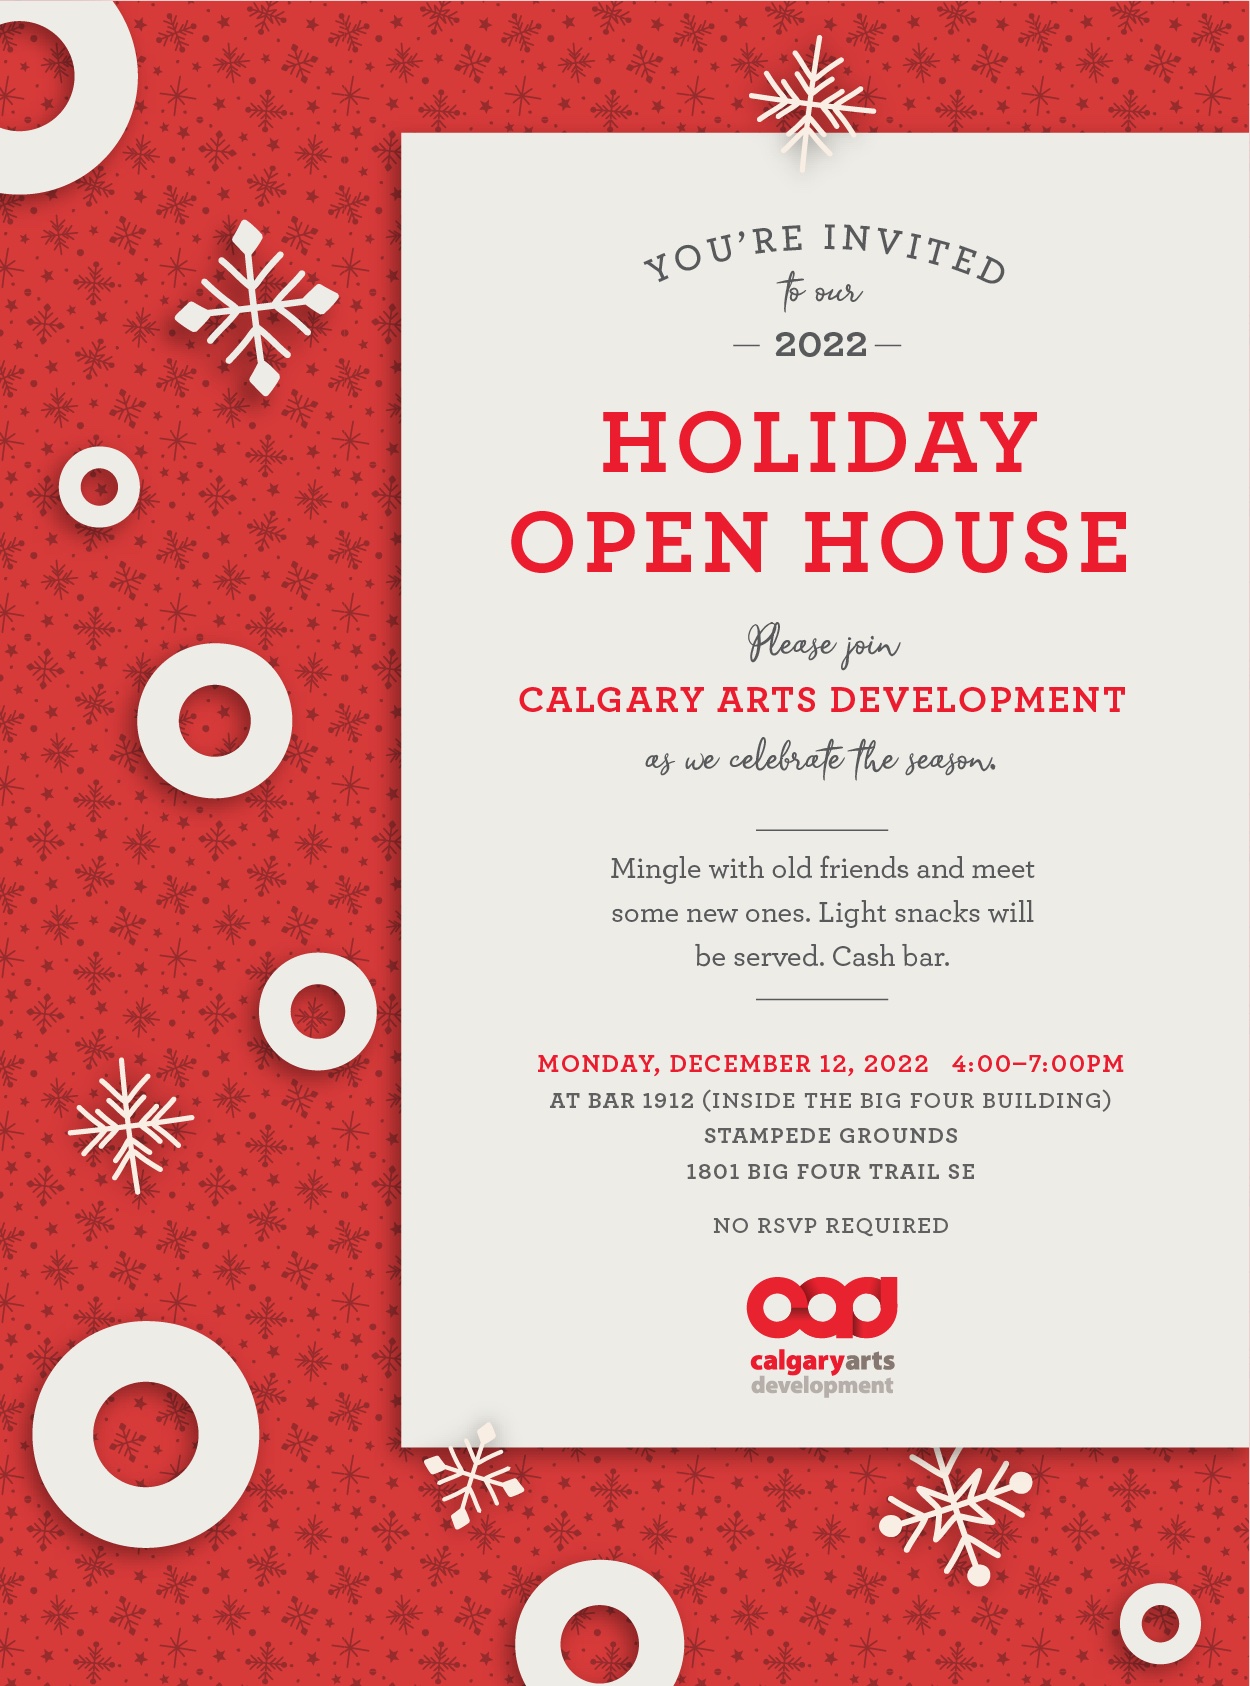 An invitation for Calgary Arts Development's Holiday Open House.